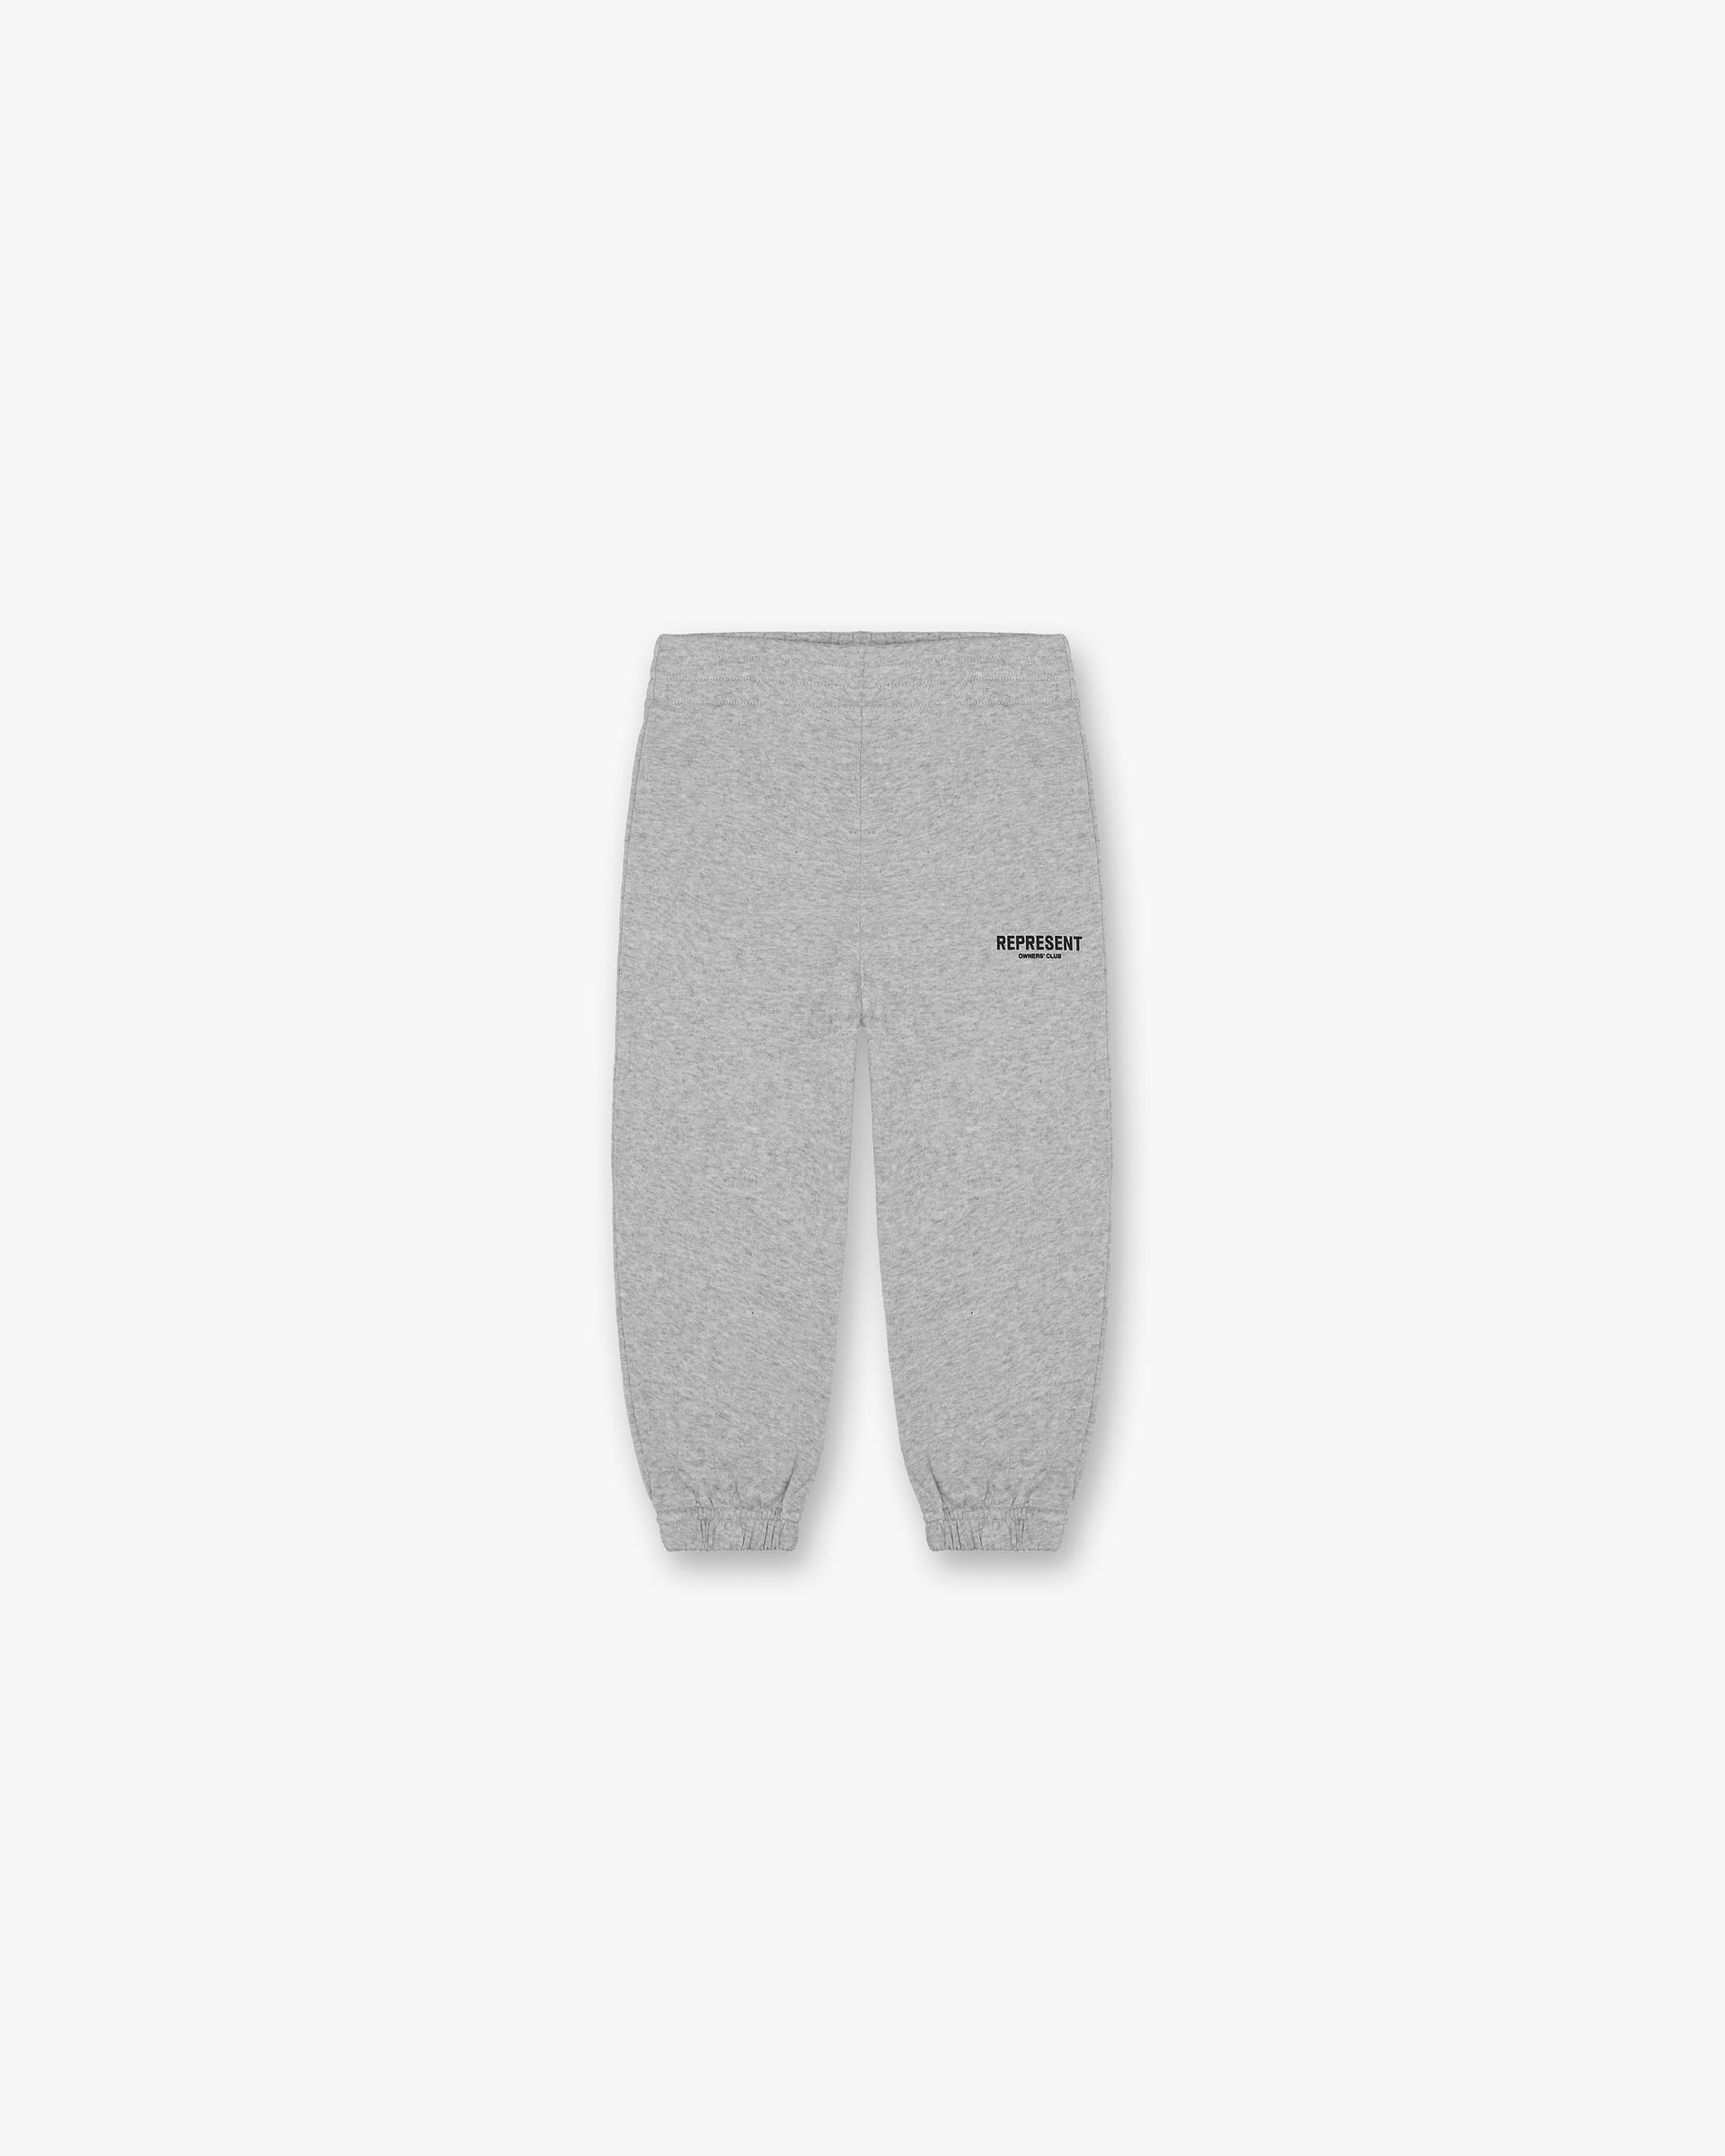 Represent Mini Owners Club Sweatpants | Ash Grey Pants Owners Club | Represent Clo